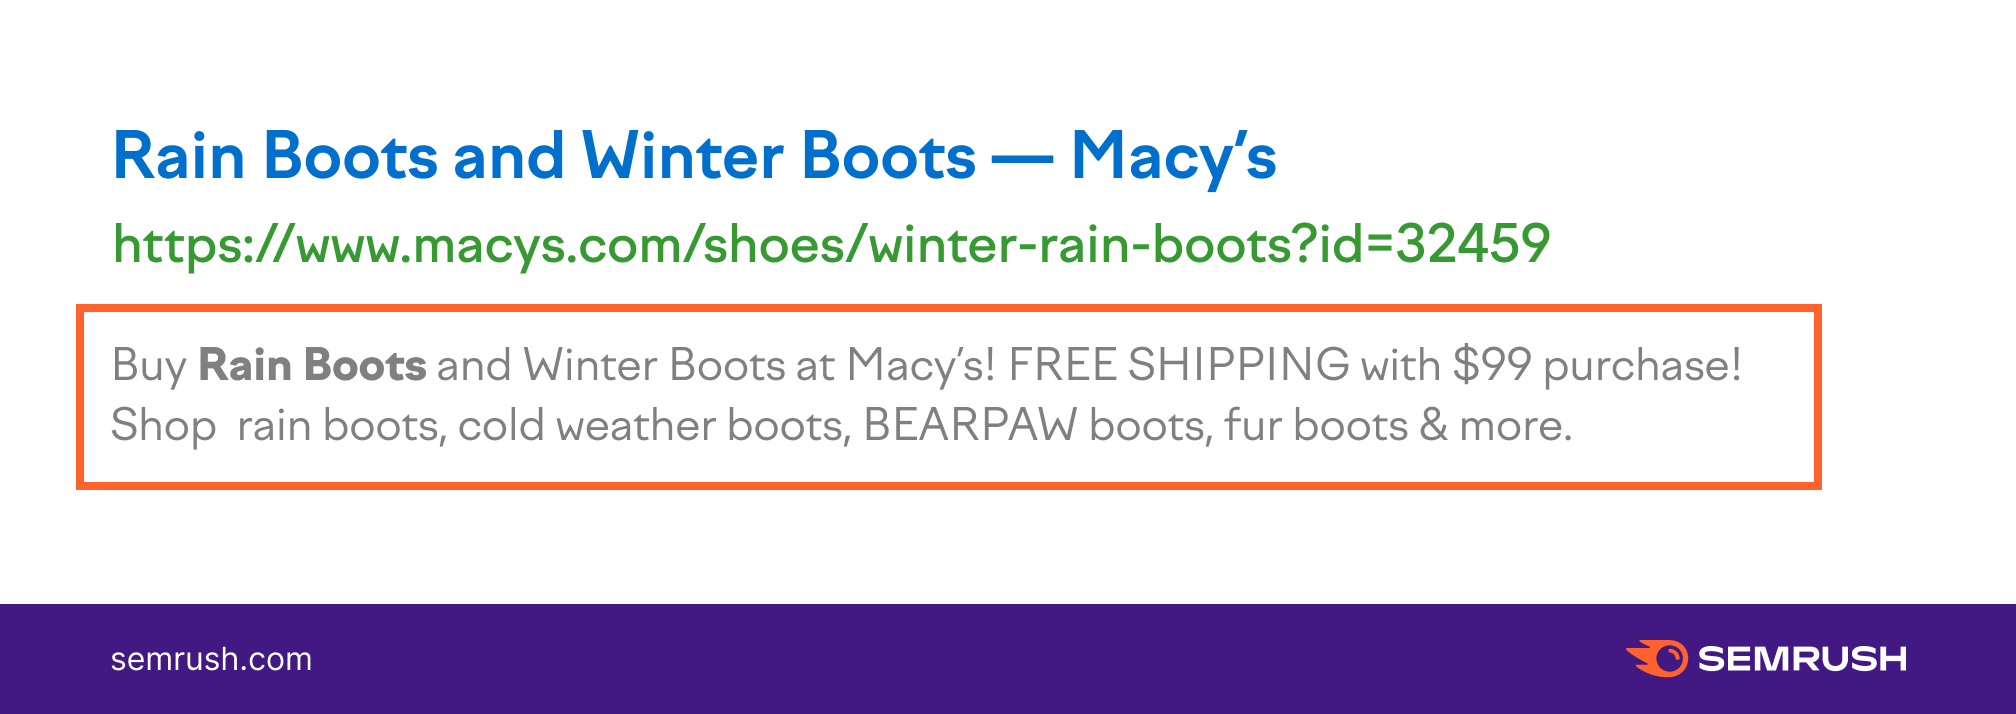 Boots meta description example